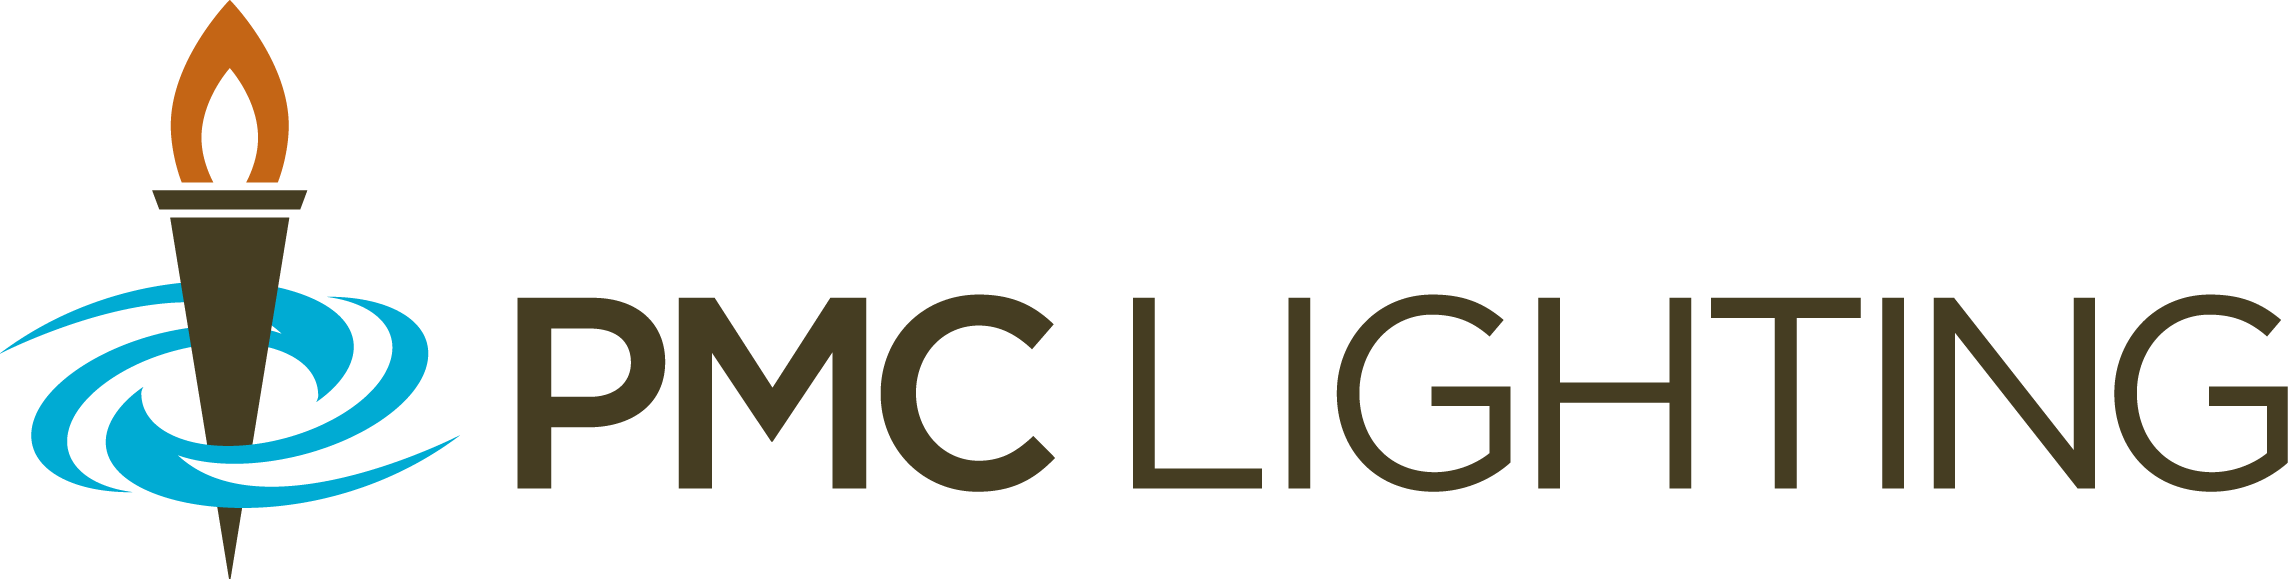 PMC Lighting Logo